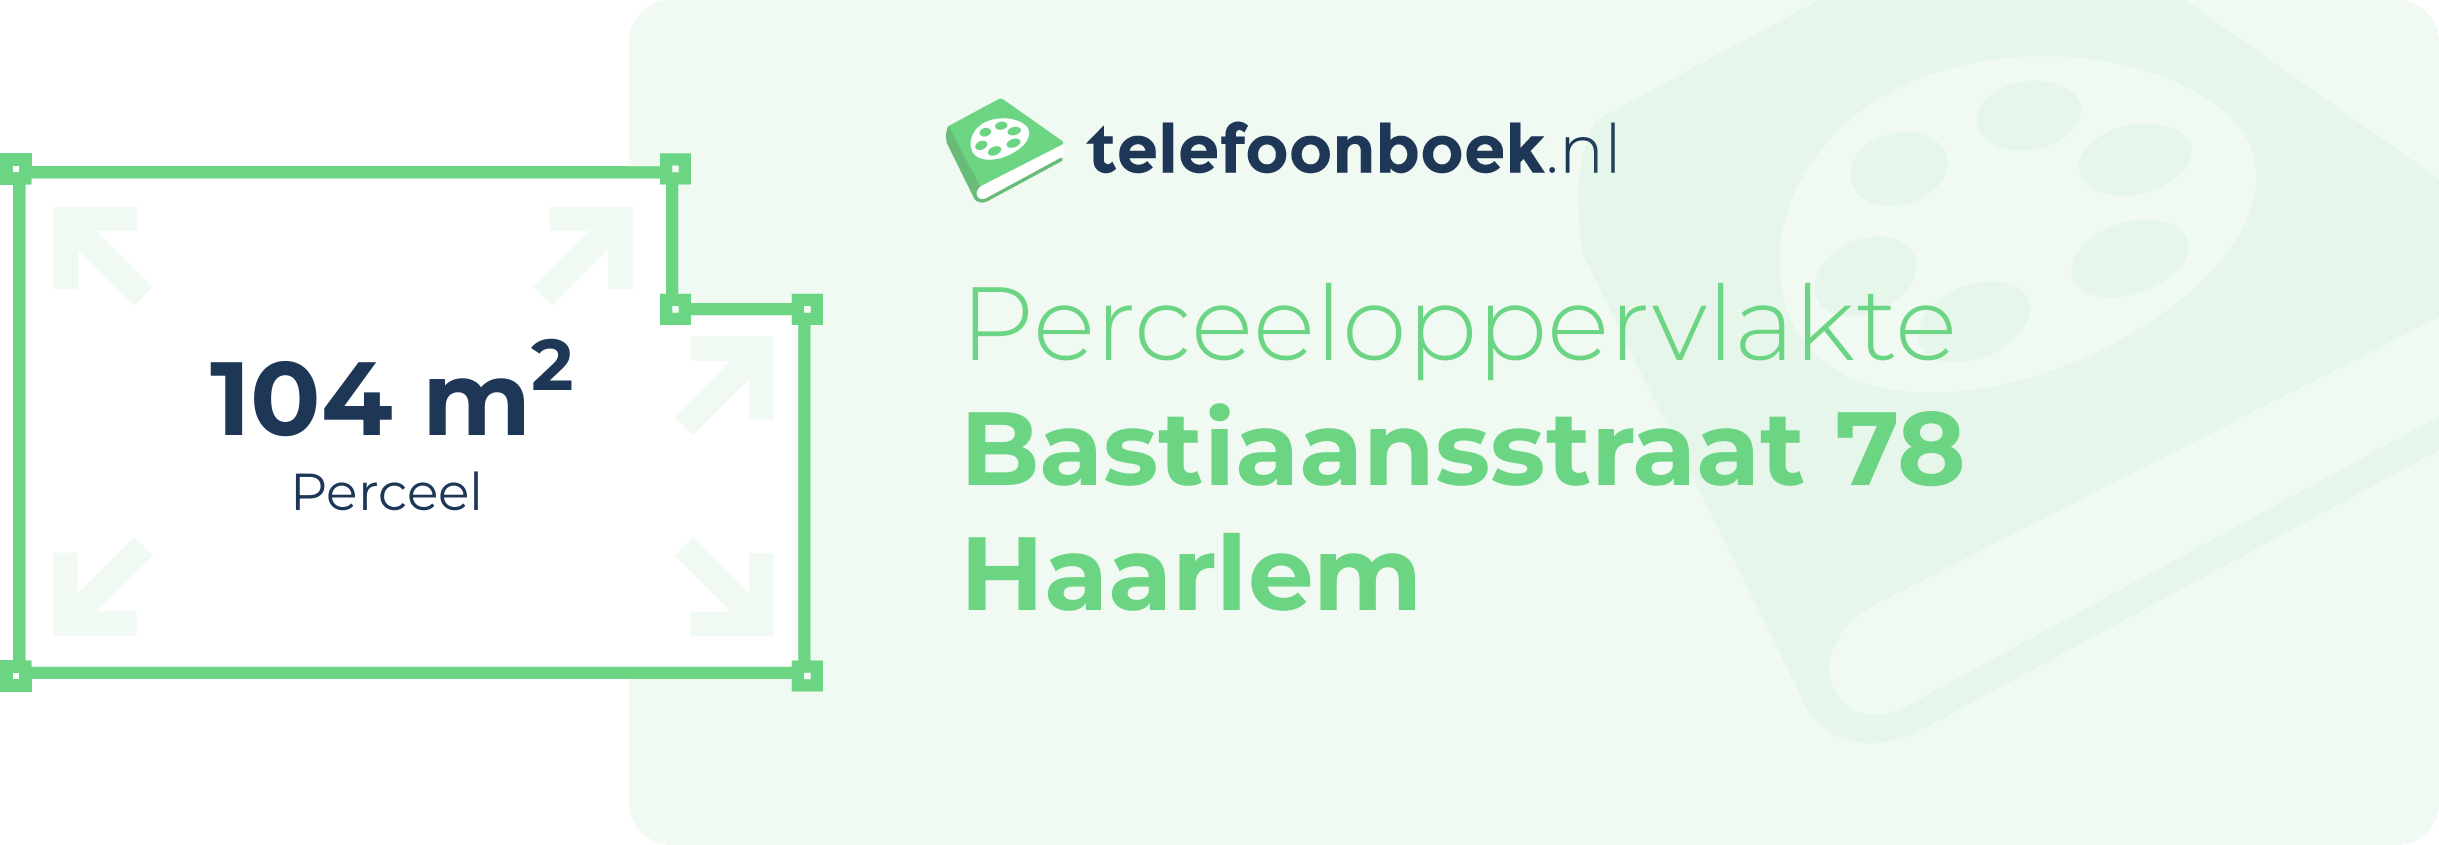 Perceeloppervlakte Bastiaansstraat 78 Haarlem